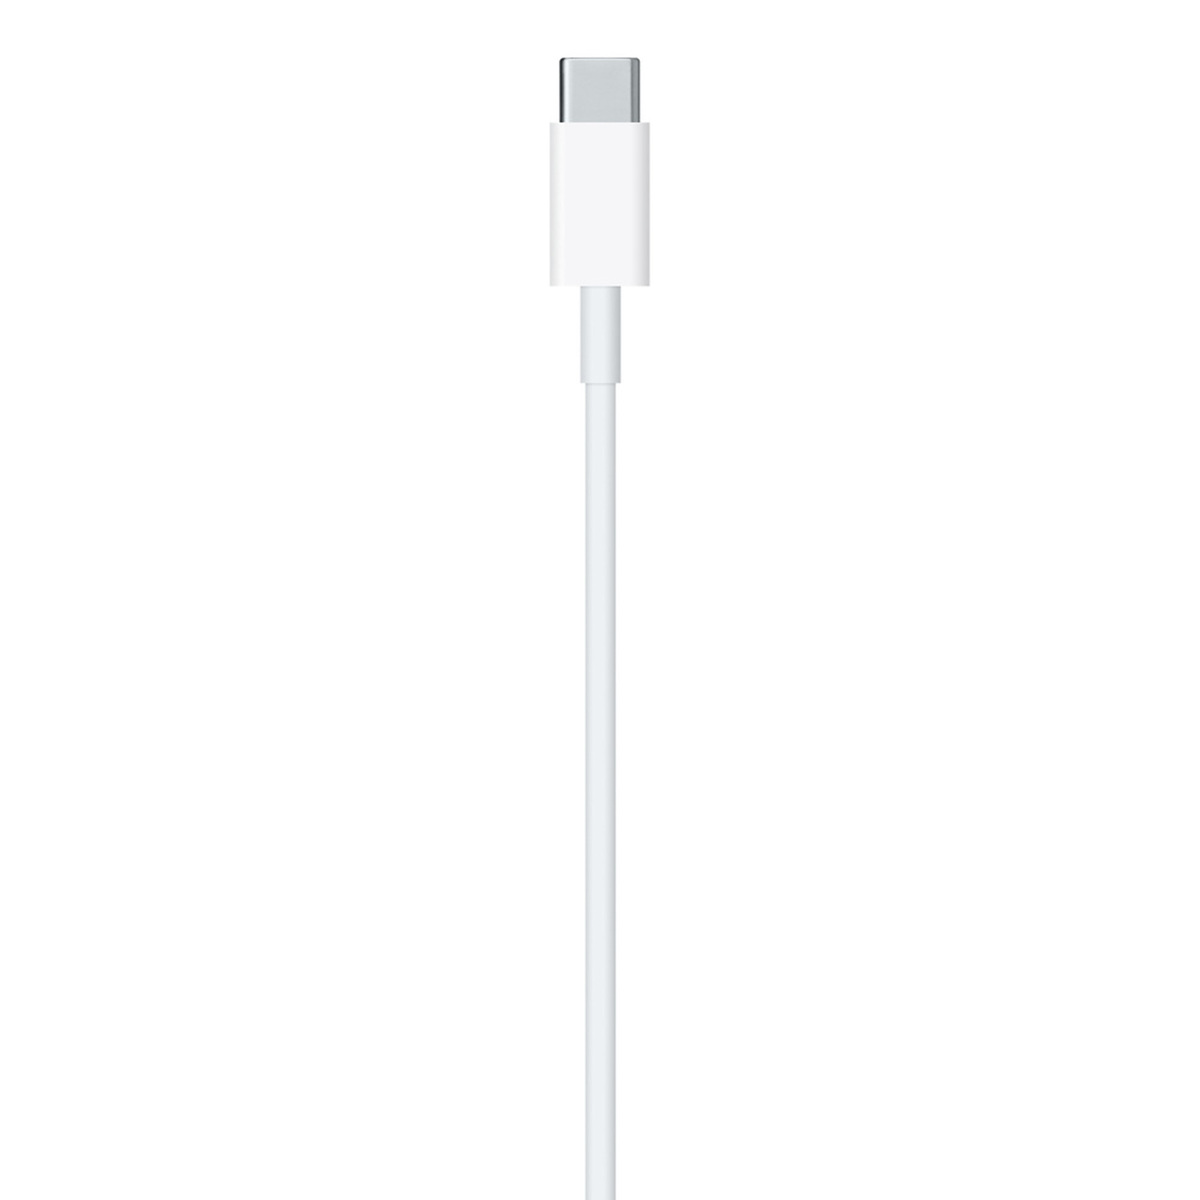 Apple USB-C to Lightning Cable MQGH2ZM 2M